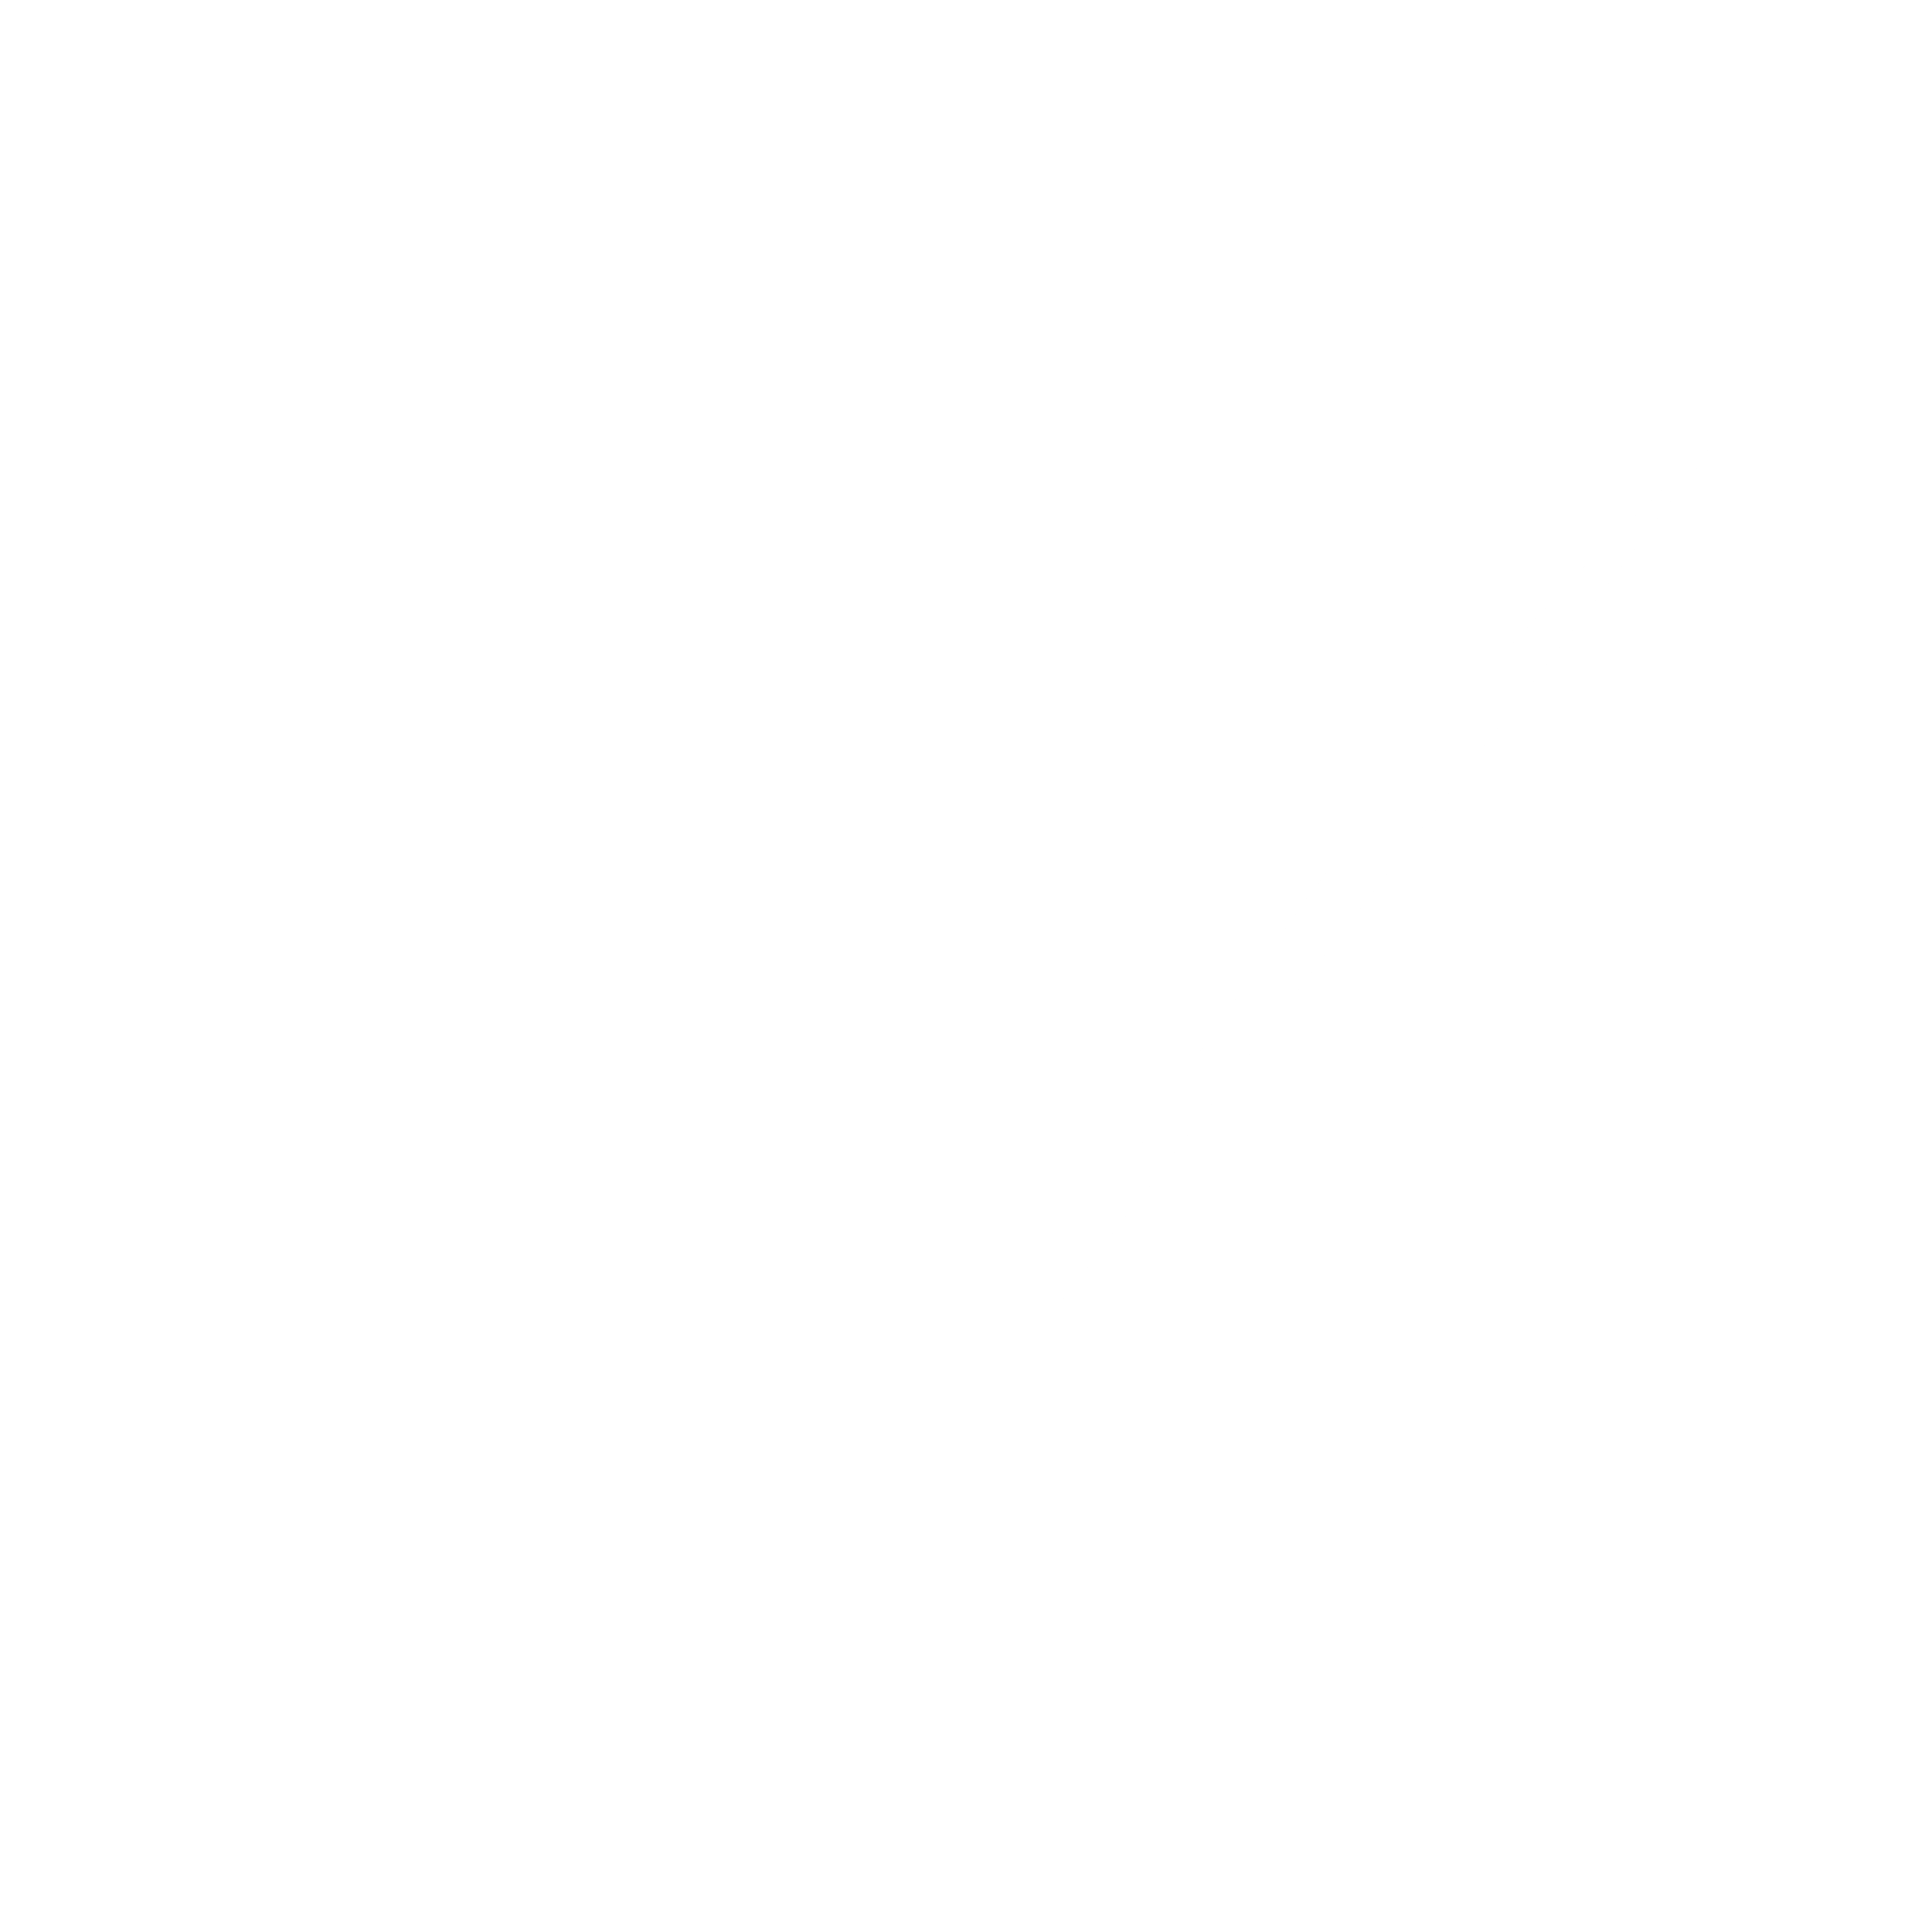 Cox Communications Logo PNG Transparent & SVG Vector.